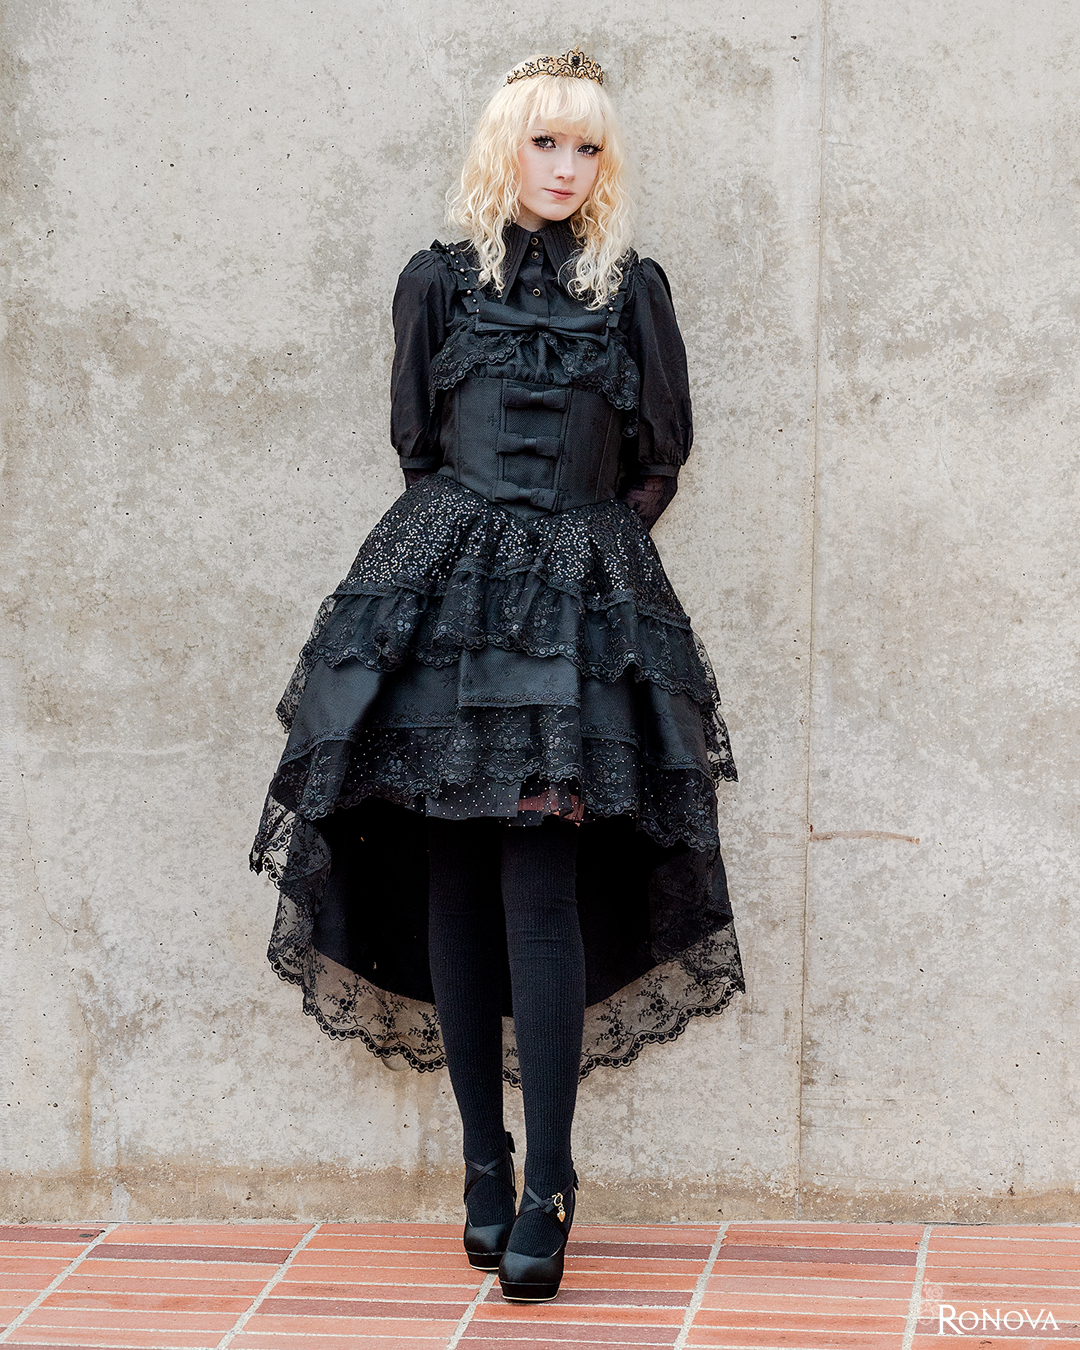 The Dark Grace Dress by Ronova